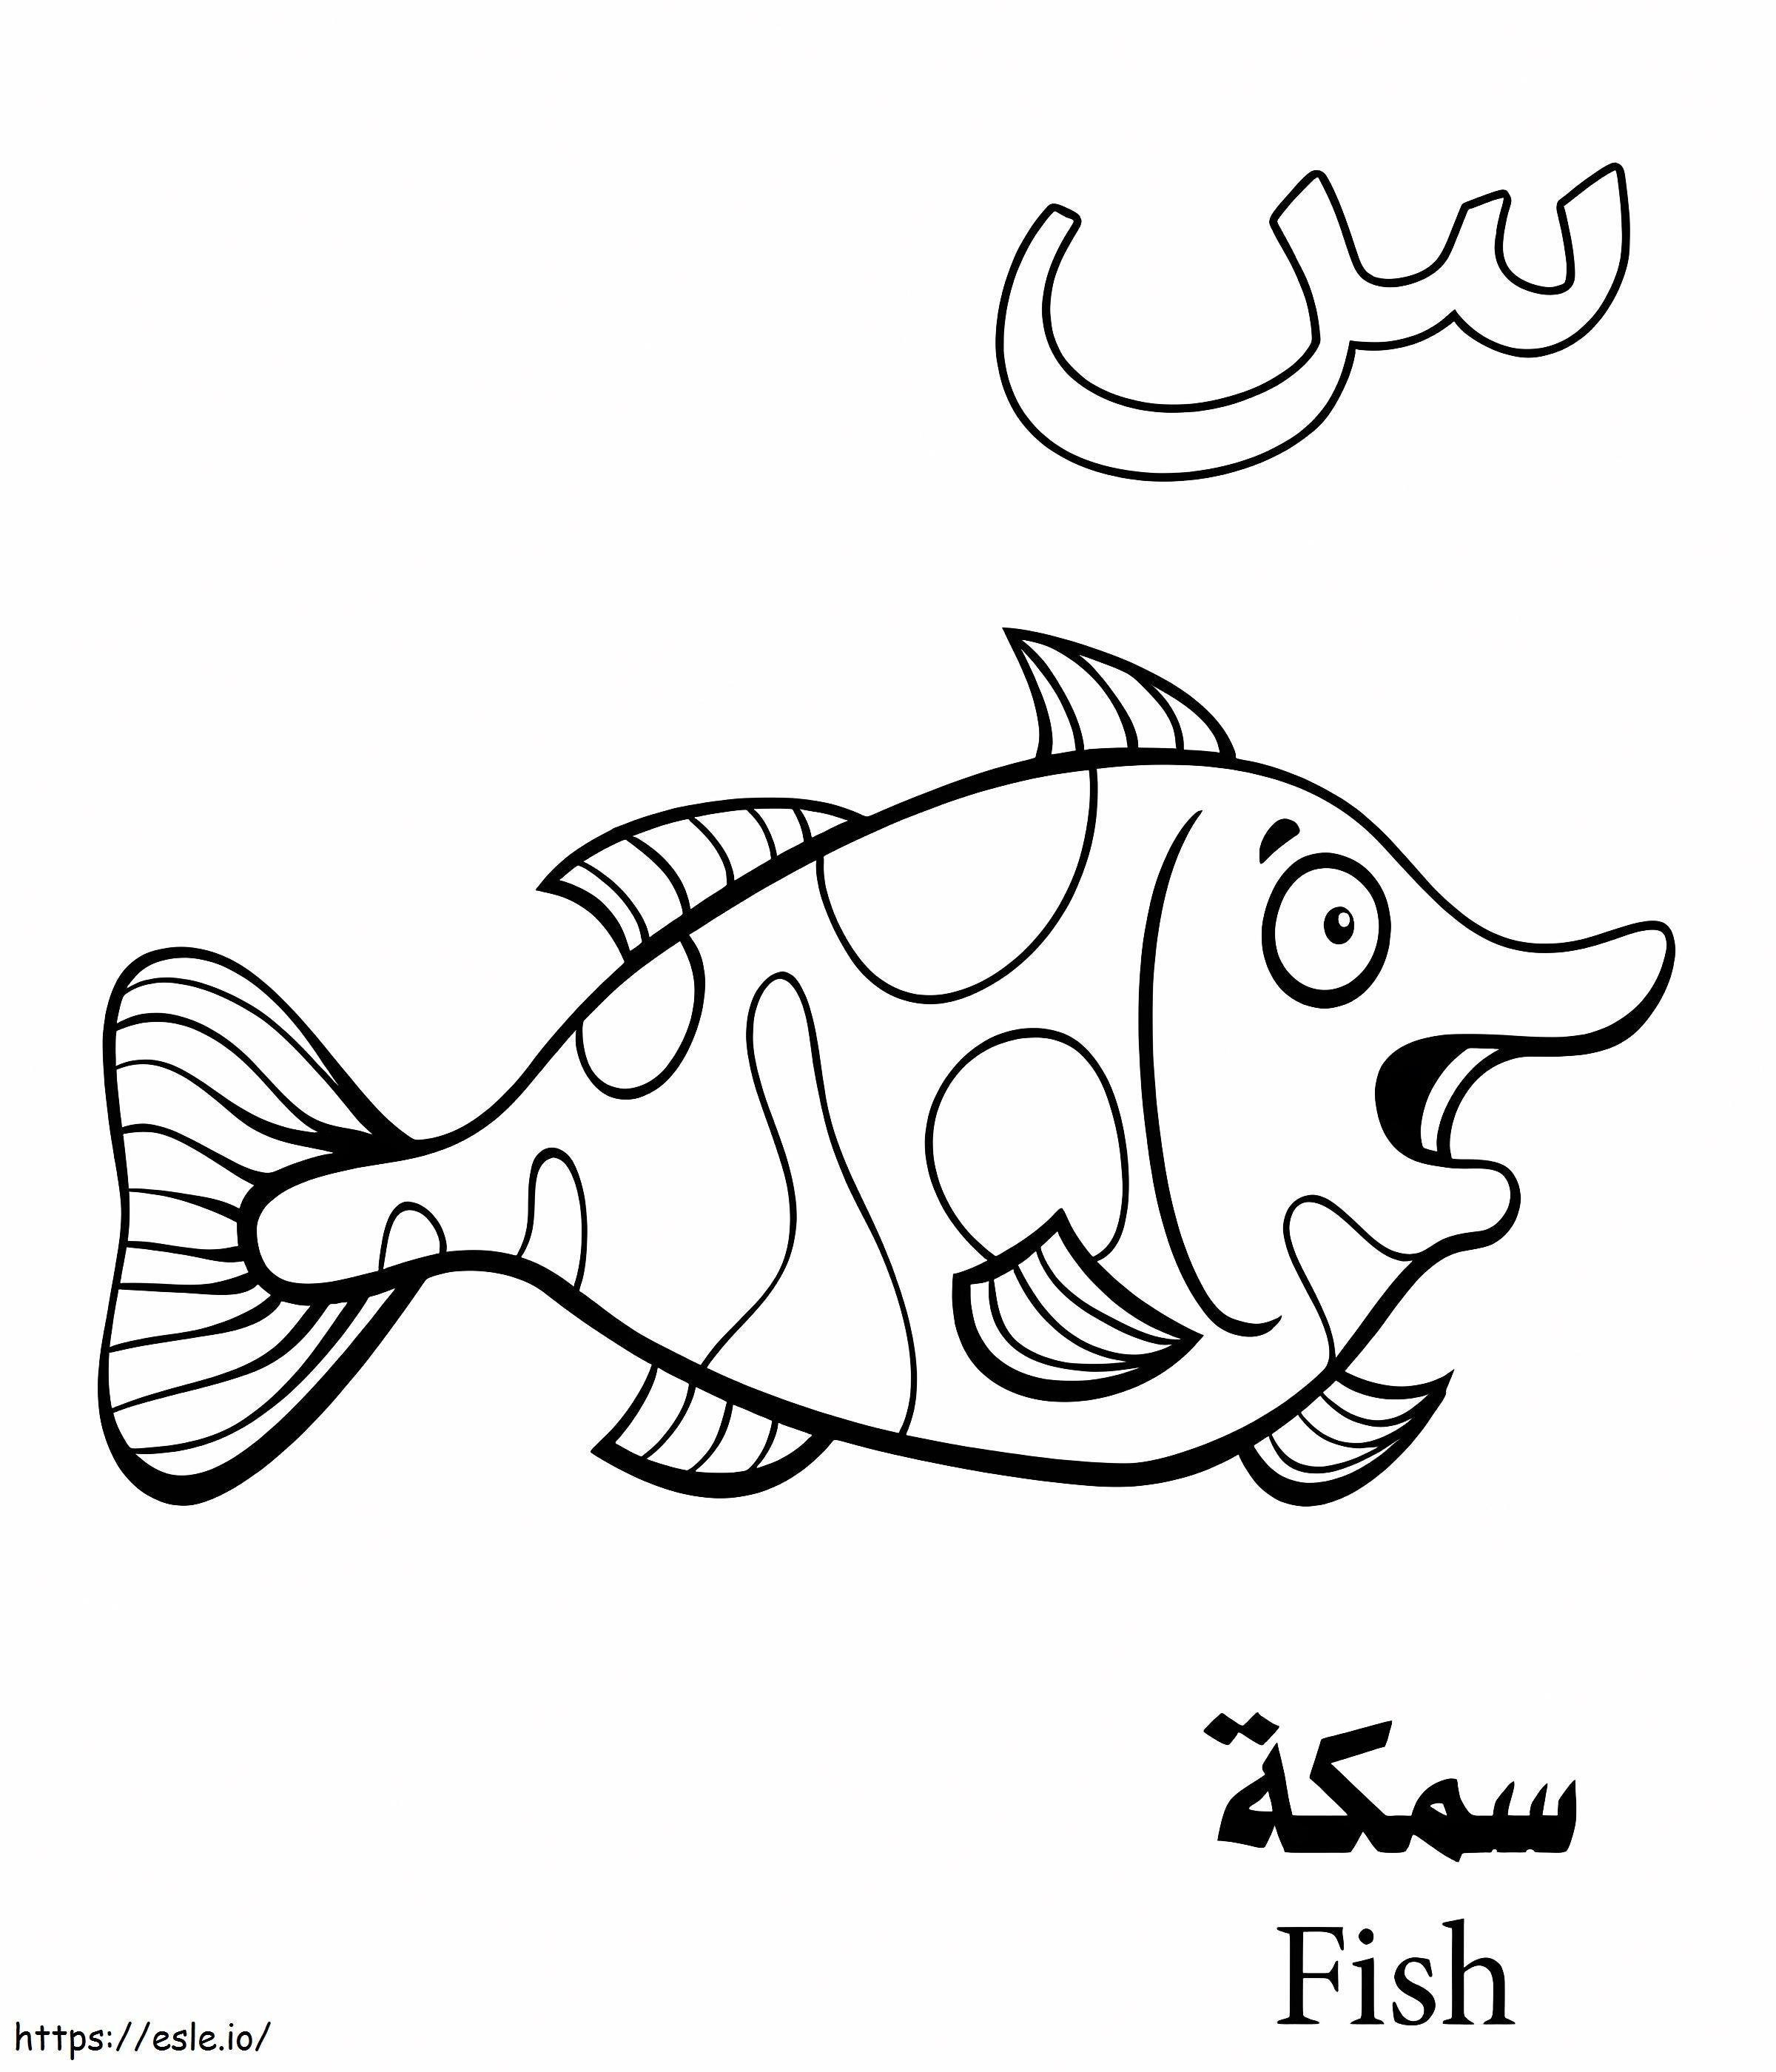 Fish Arabic Alphabet coloring page